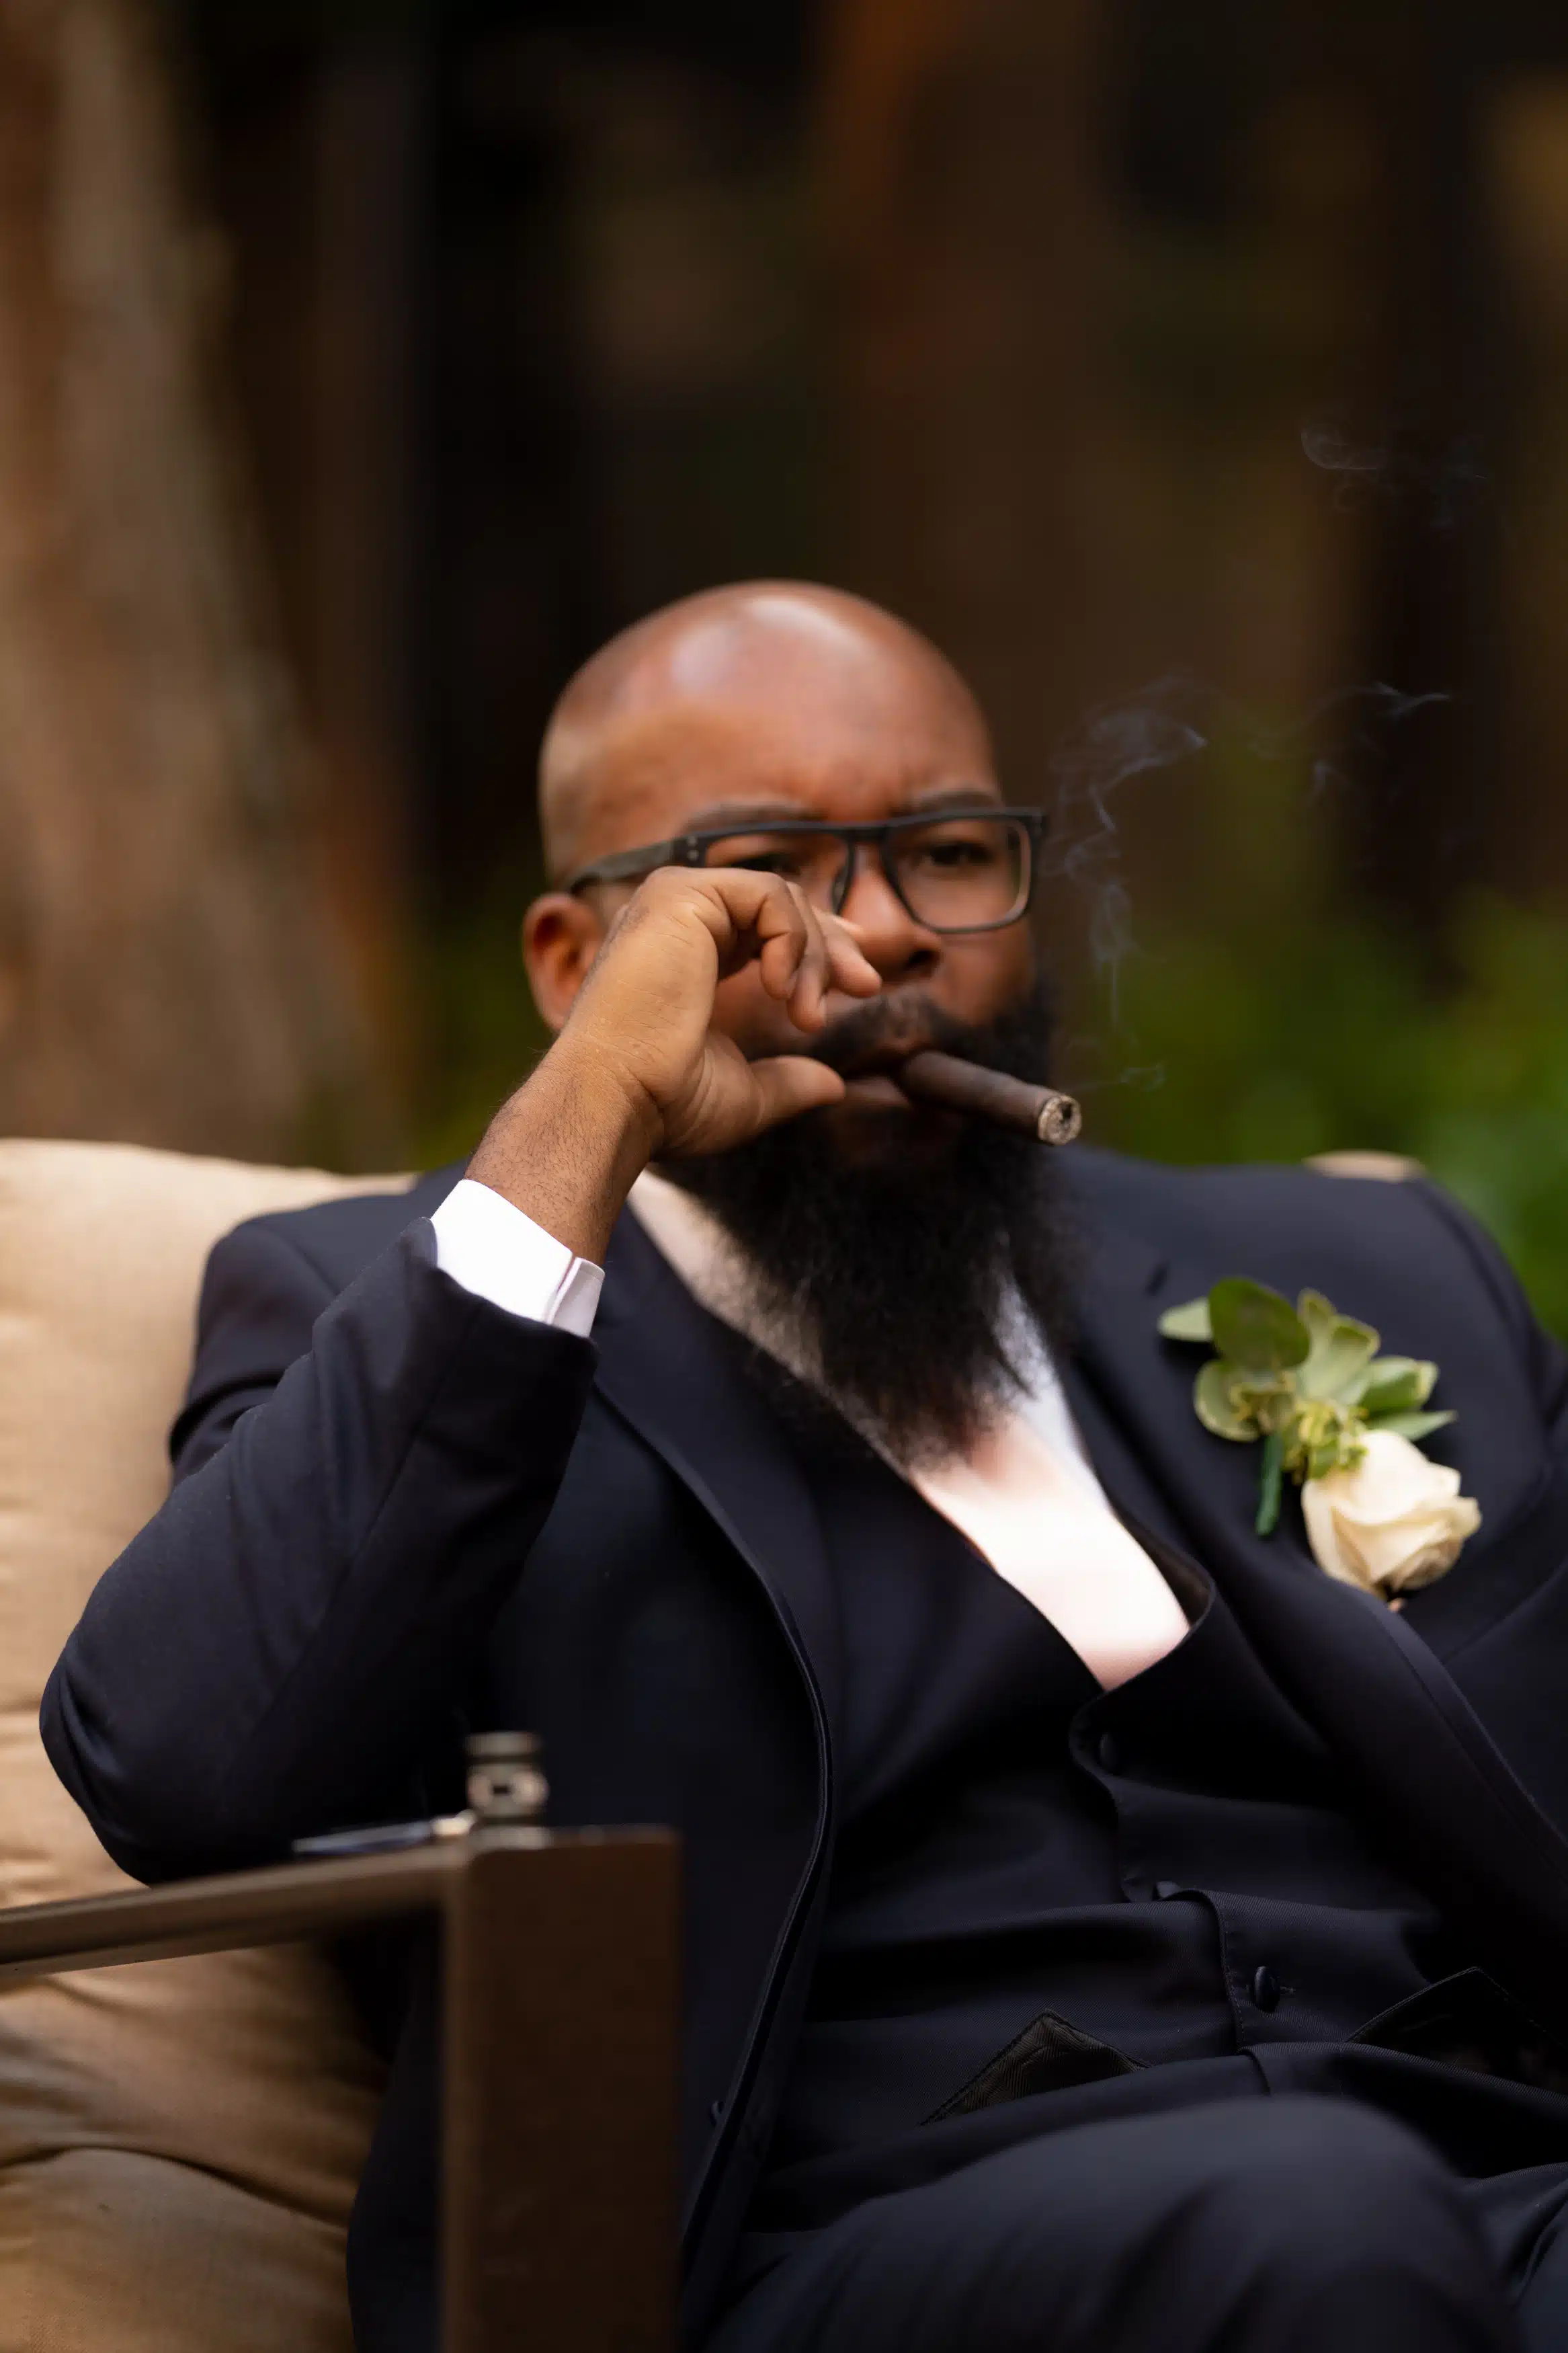 Man smoking in wedding venue at hilton hotel wedding venues. Wedding Guest Expierence